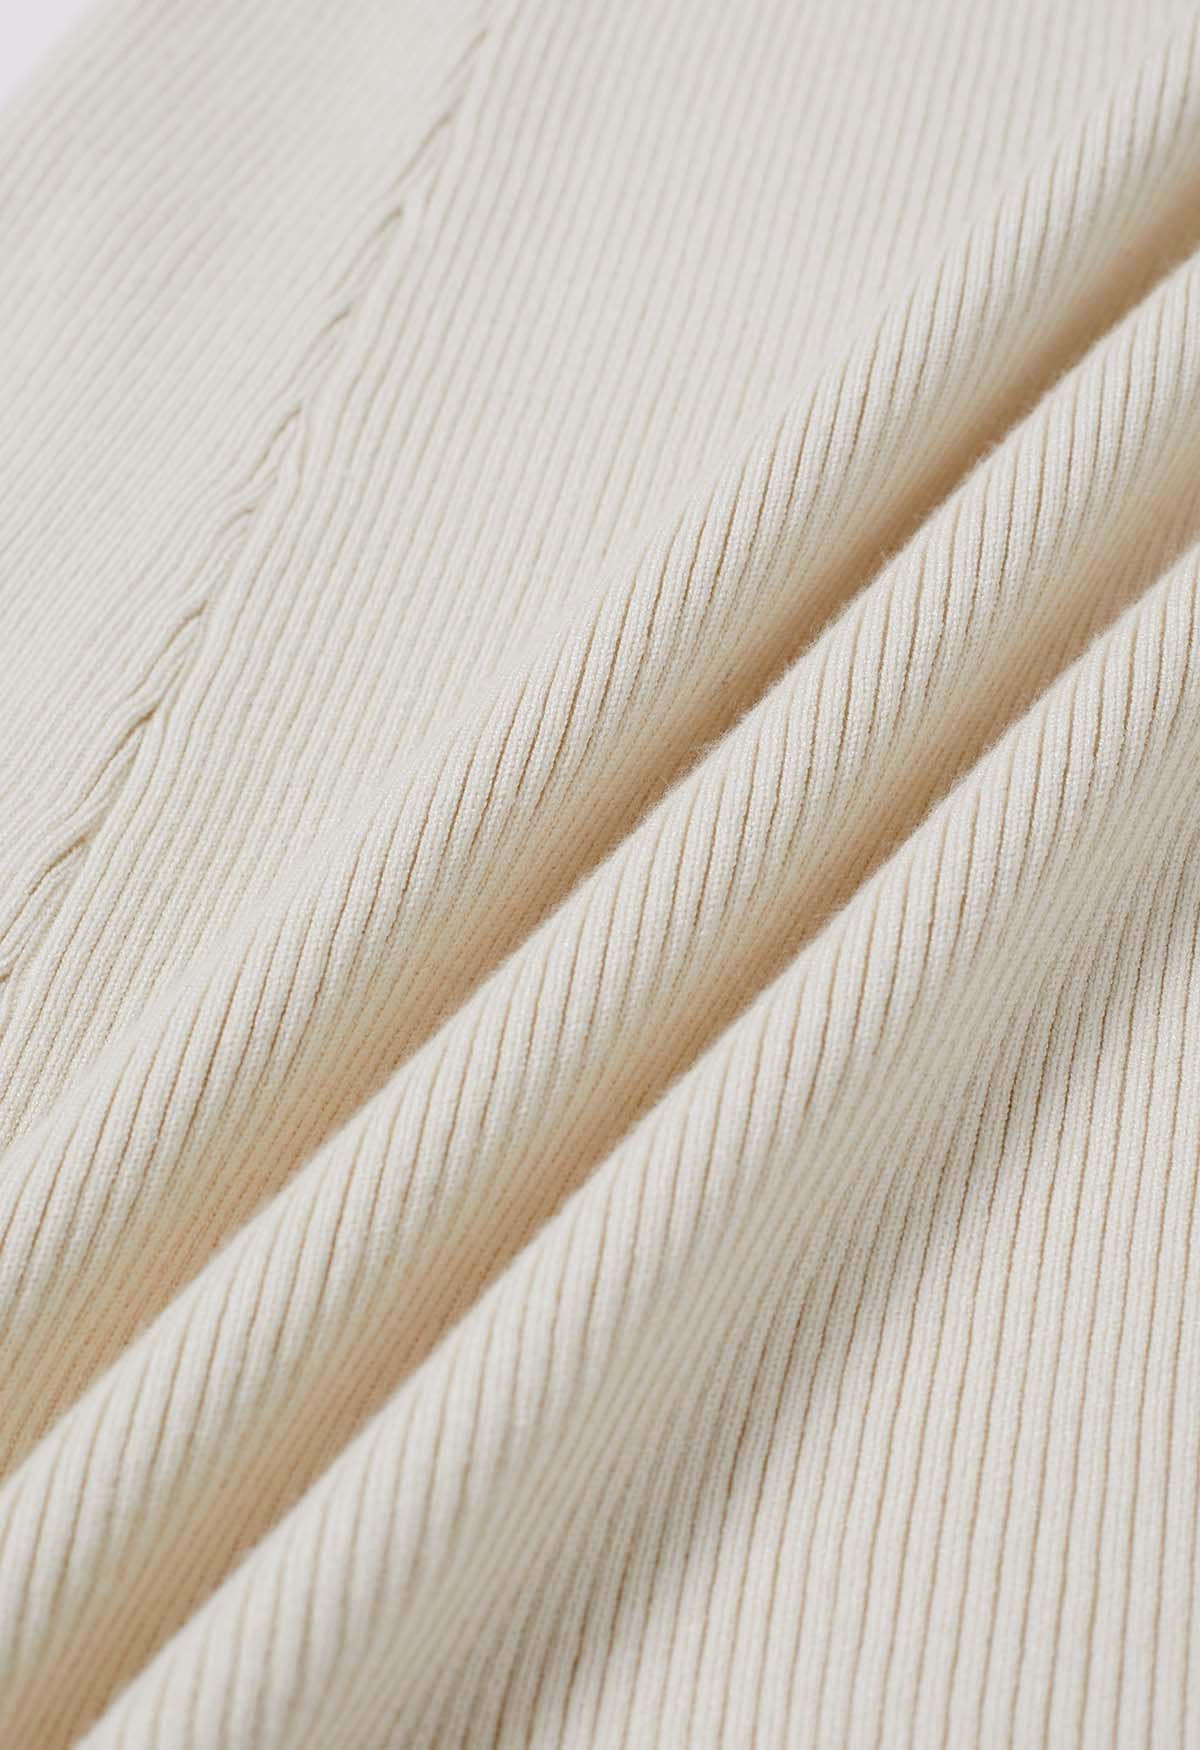 Asymmetric Cutout Neckline Rib Knit Midi Dress in Ivory